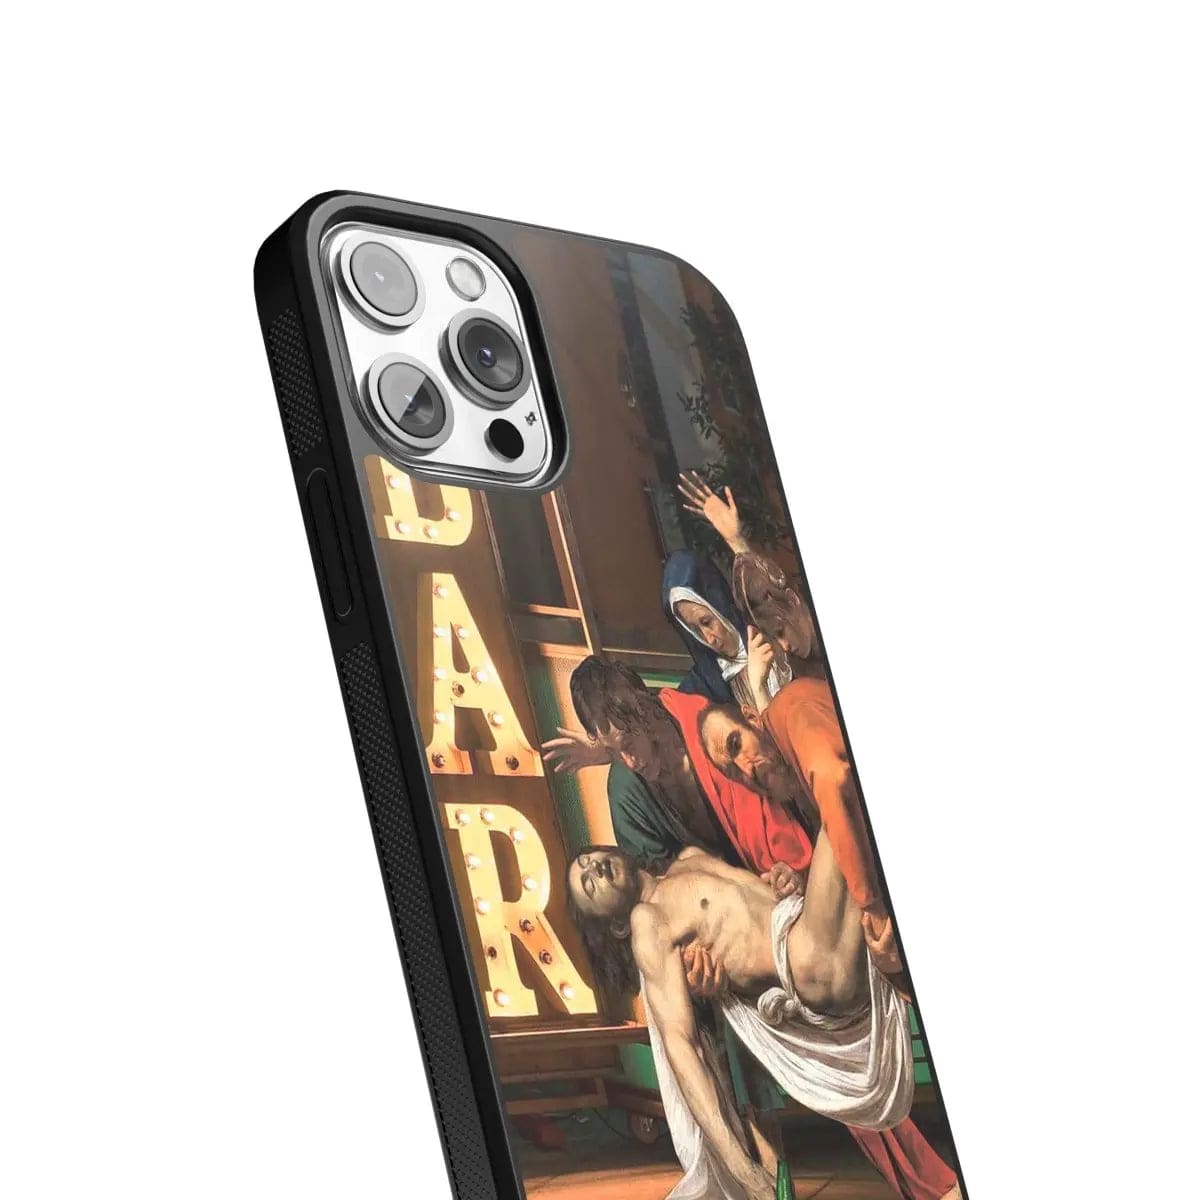 Phone case "Bar" - Artcase